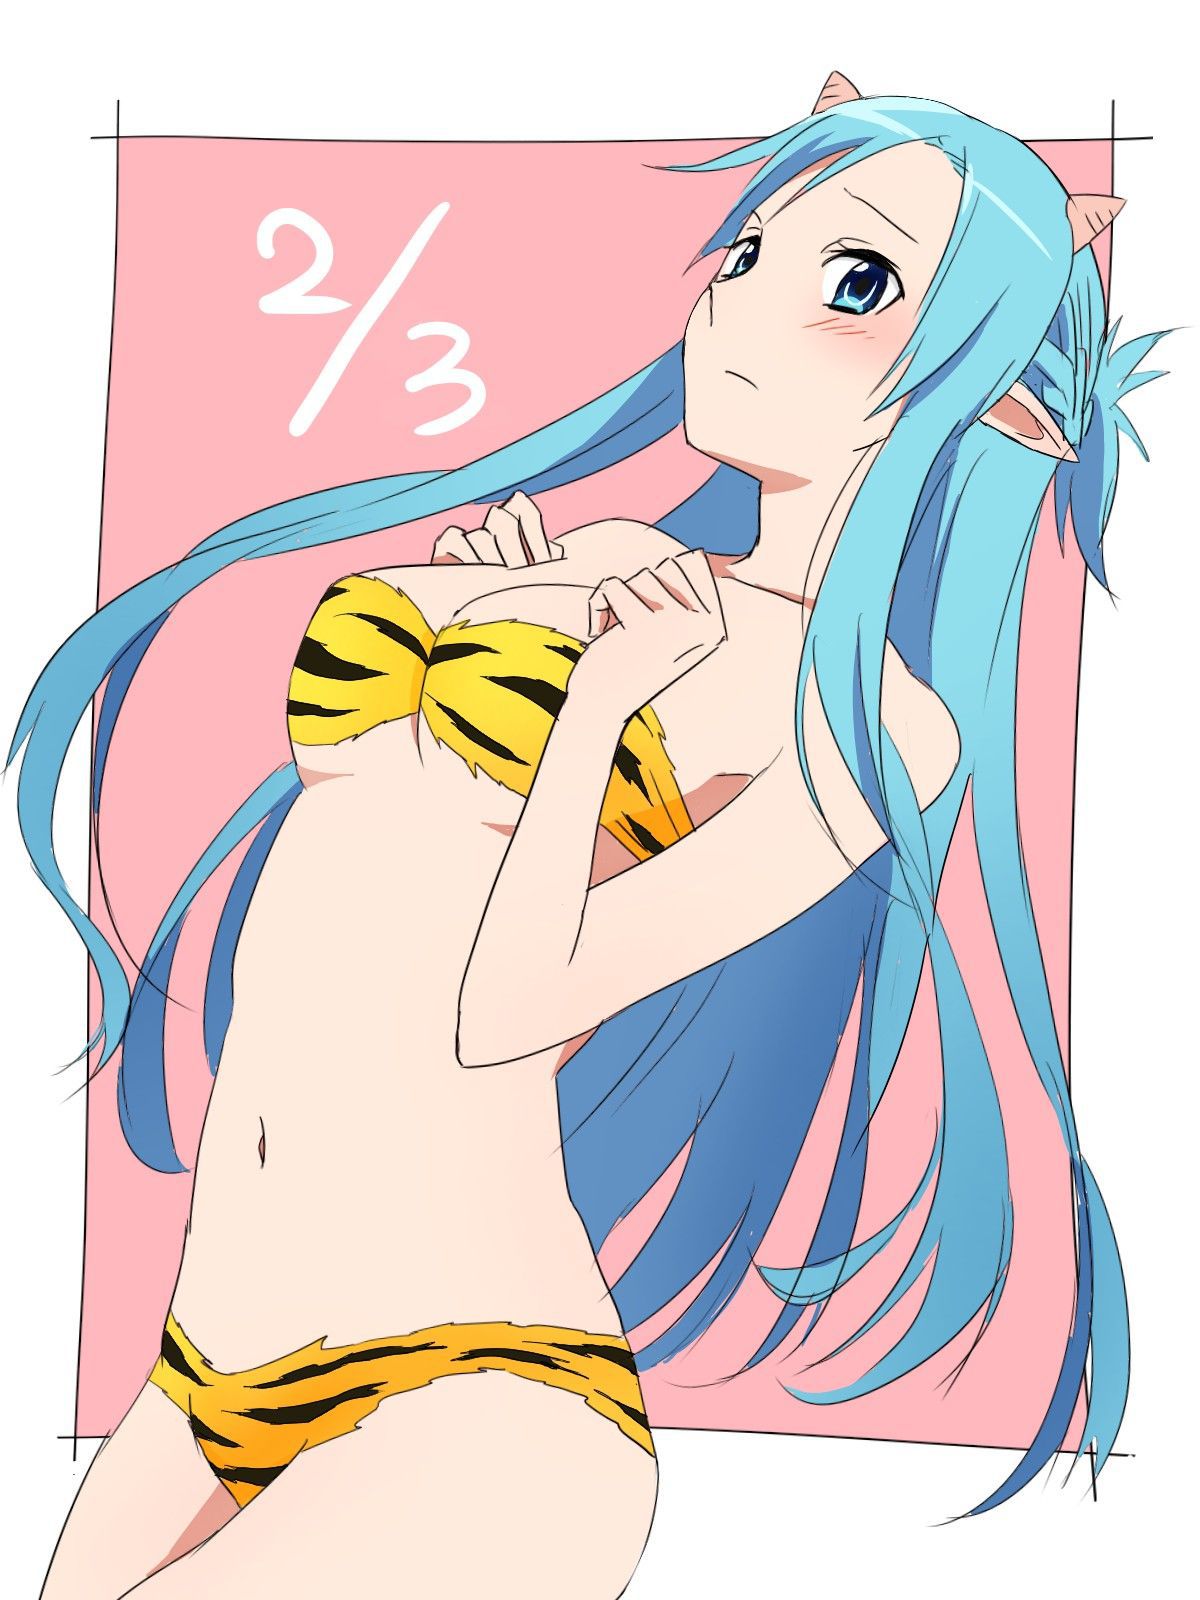 [Secondary ZIP] beautiful girl image summary of the Setsubun system has passed 23